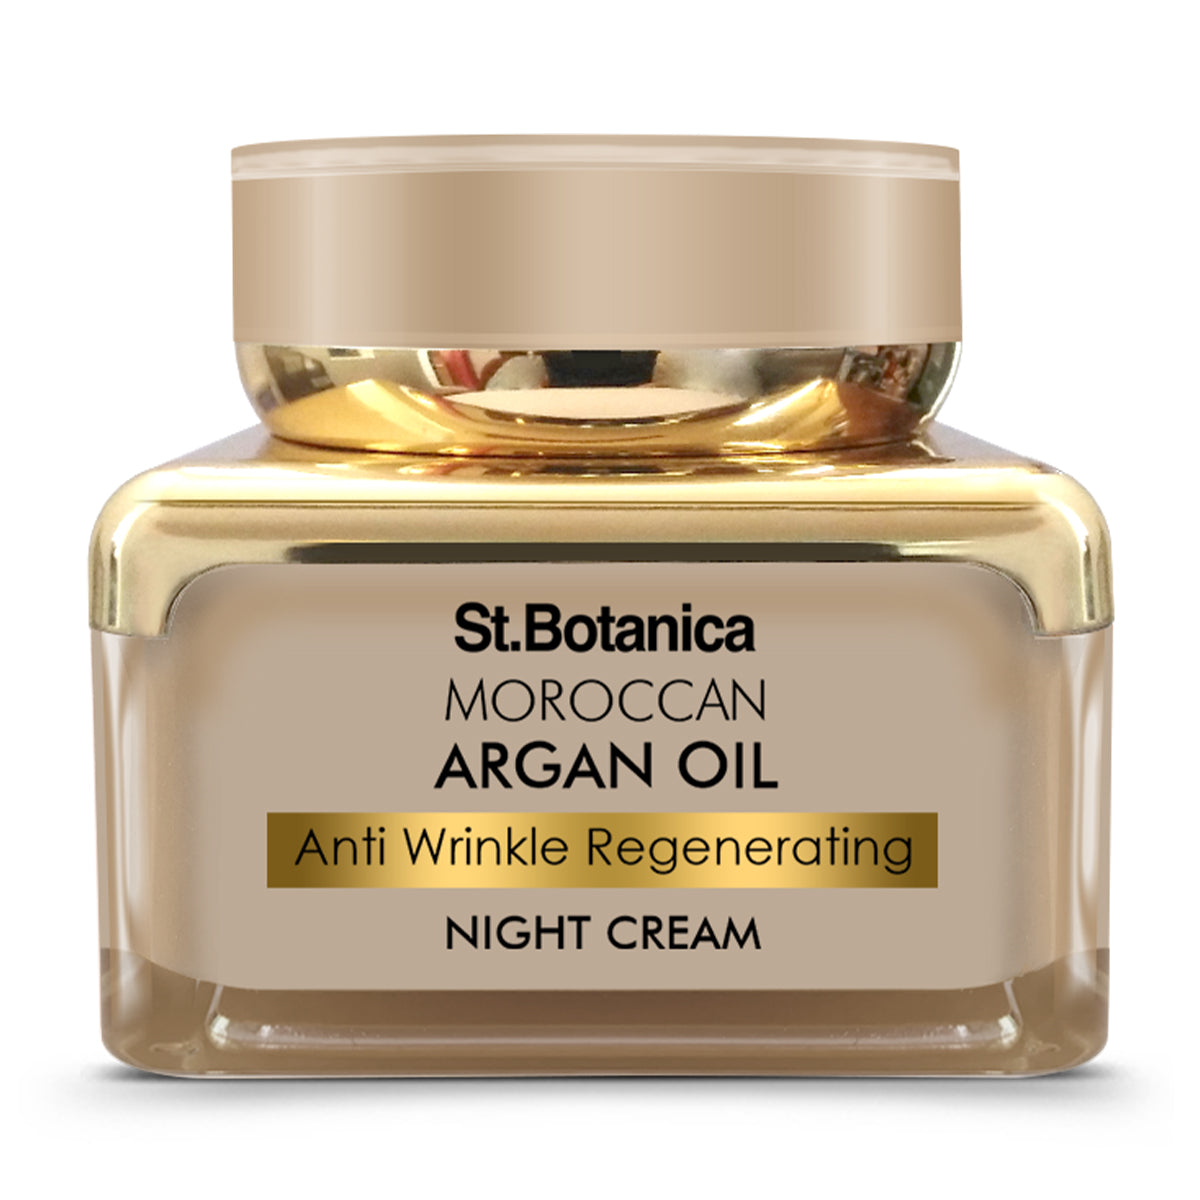 St.Botanica Moroccan Argan Oil Anti Wrinkle Regenerating Night Cream, 50g